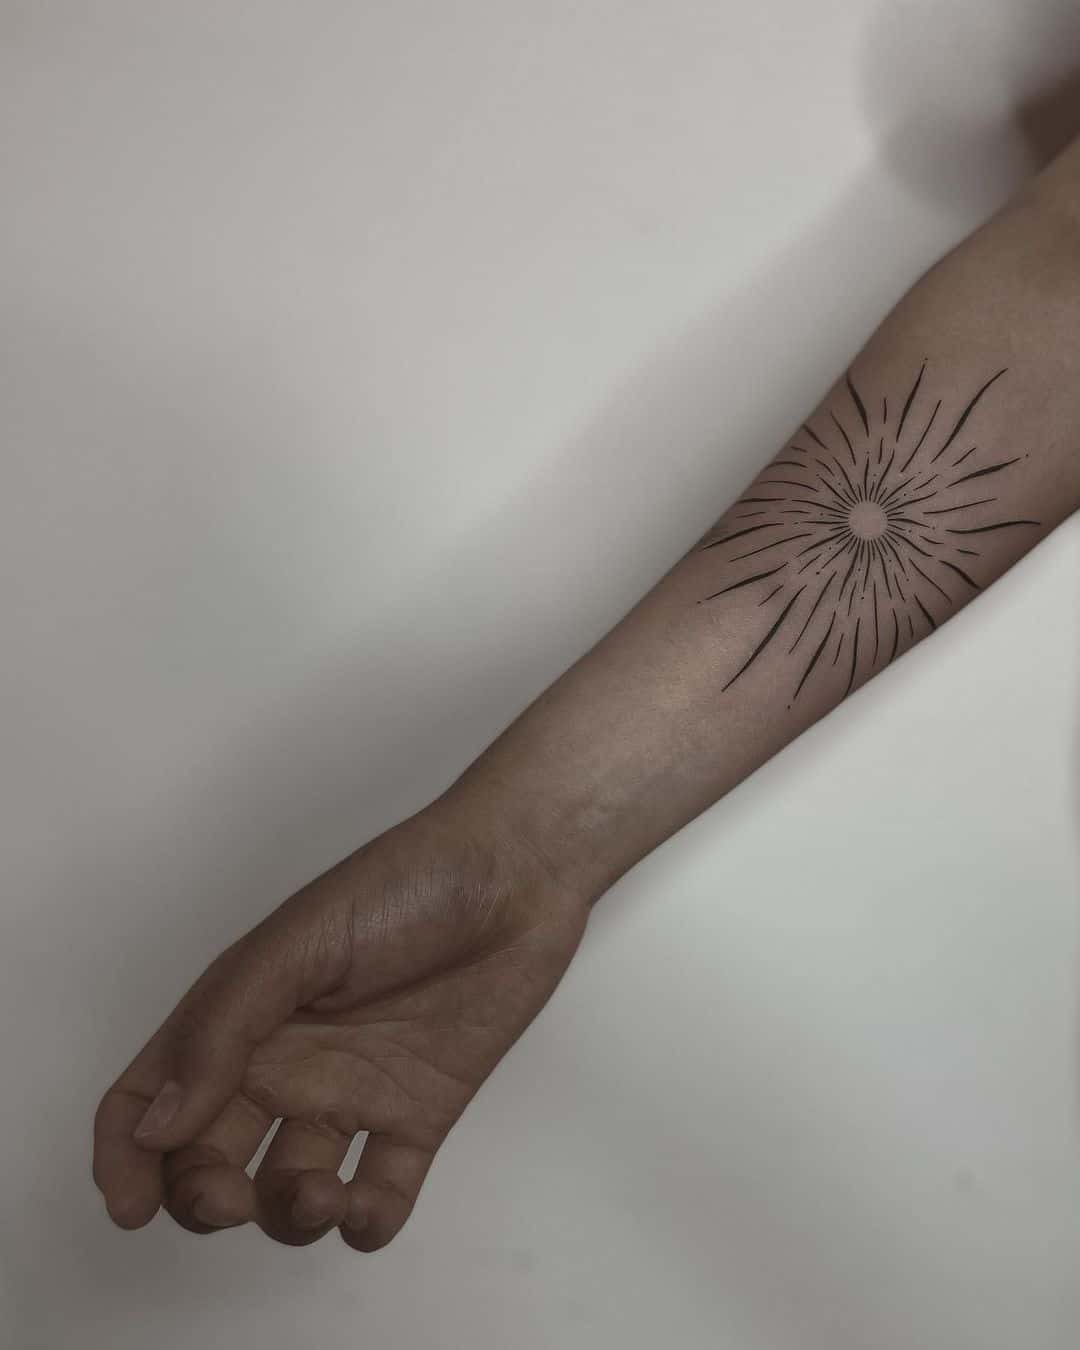 Amazing Sun Rays Tattoo on forearm